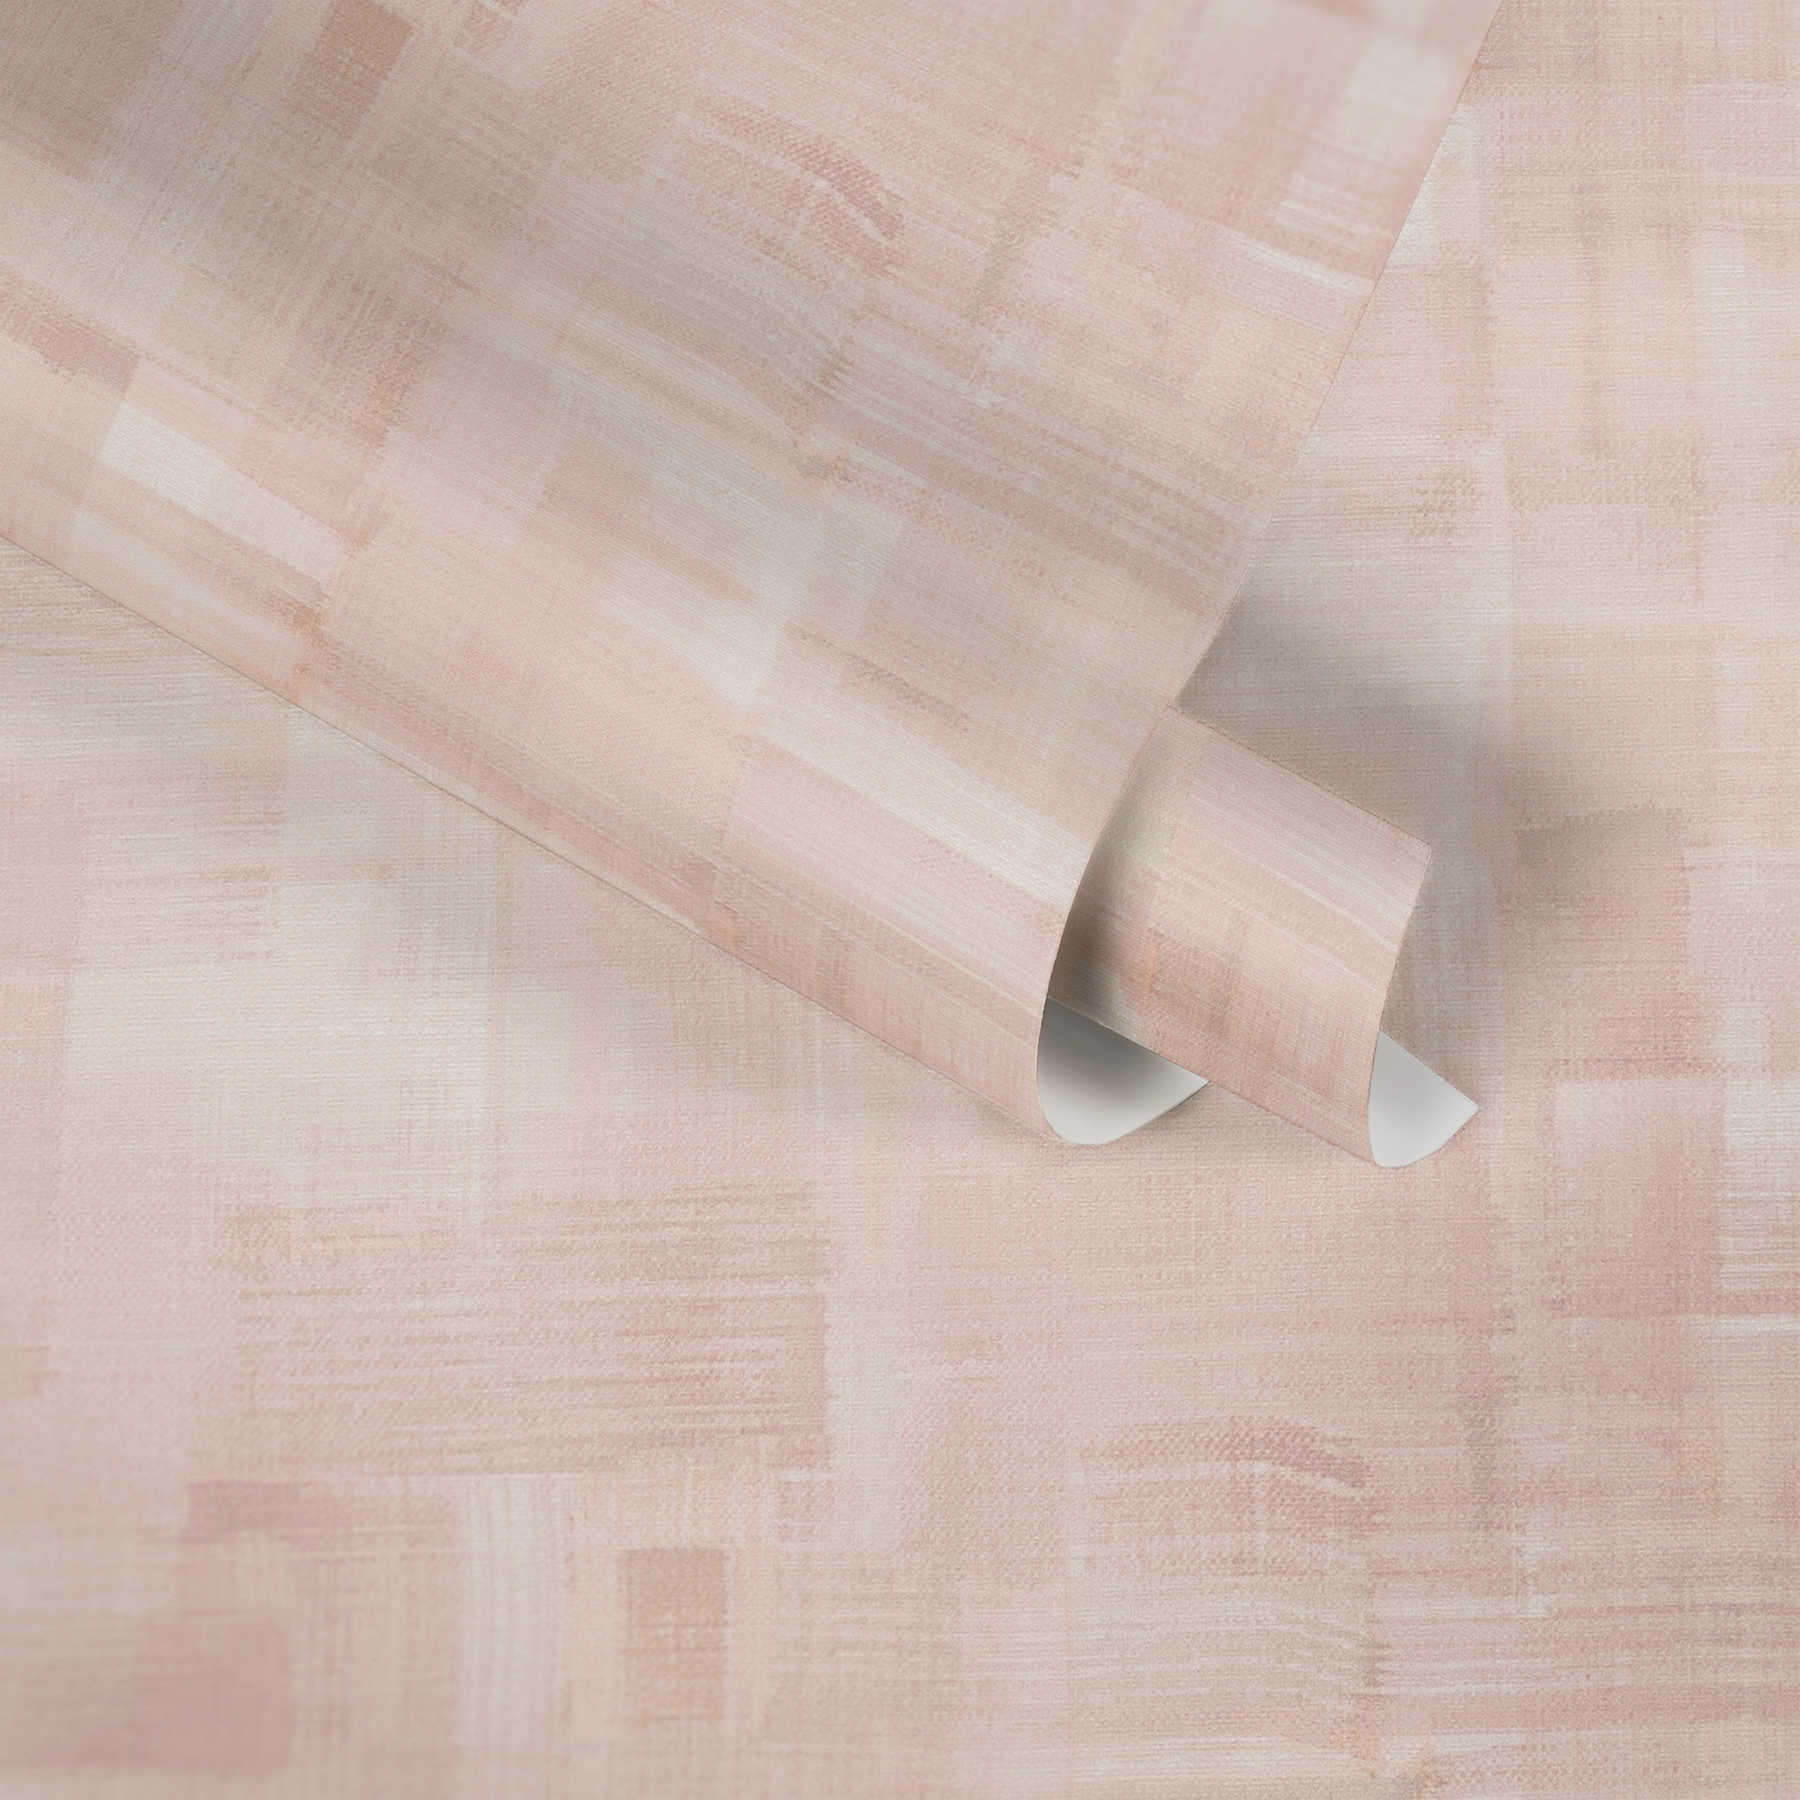             Wallpaper canvas structure, modern art - pink, beige
        